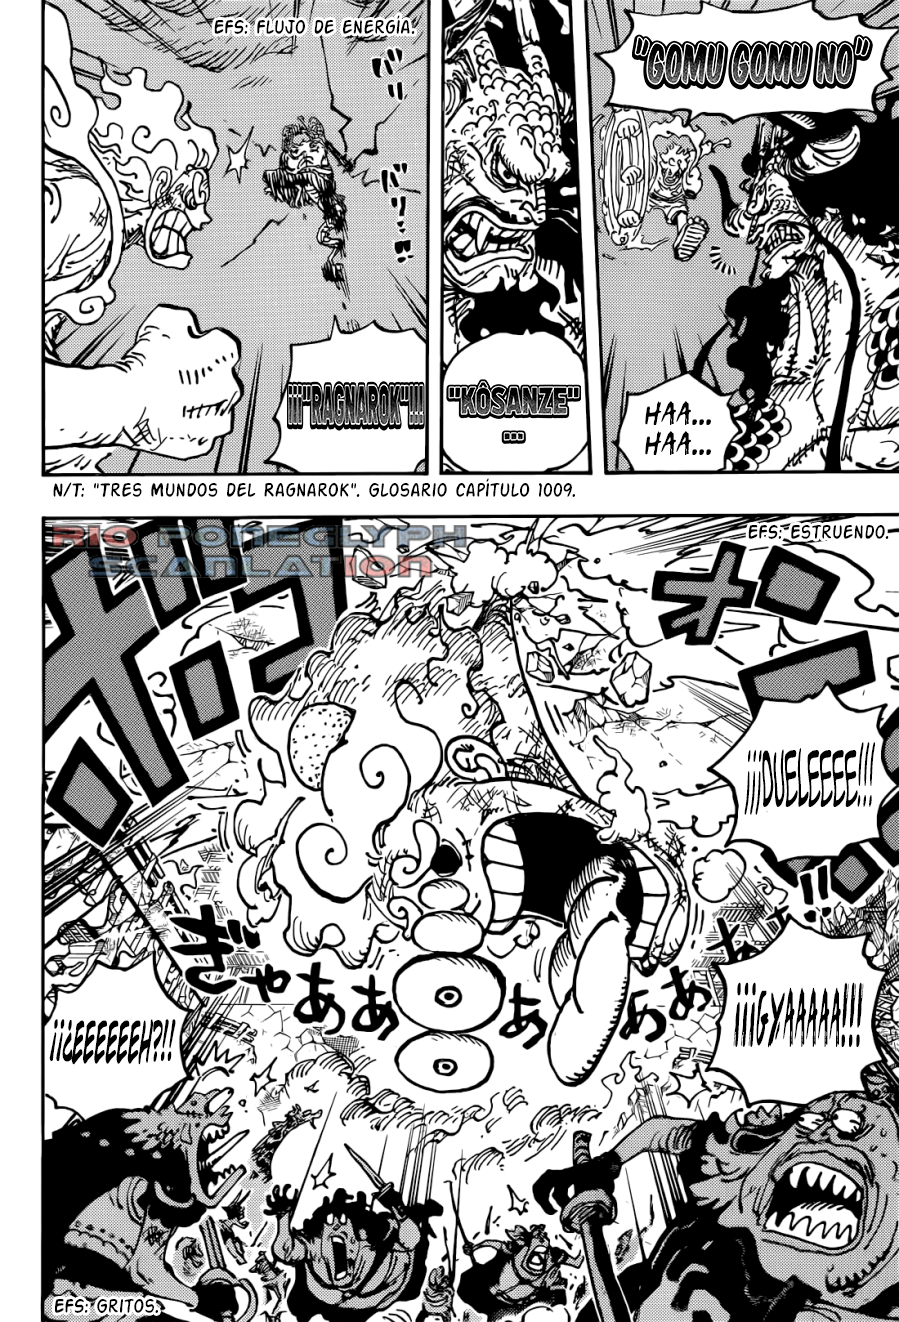 1026 - One Piece Manga 1045 [Español] [Rio Poneglyph Scans] L7Ys0qxN_o